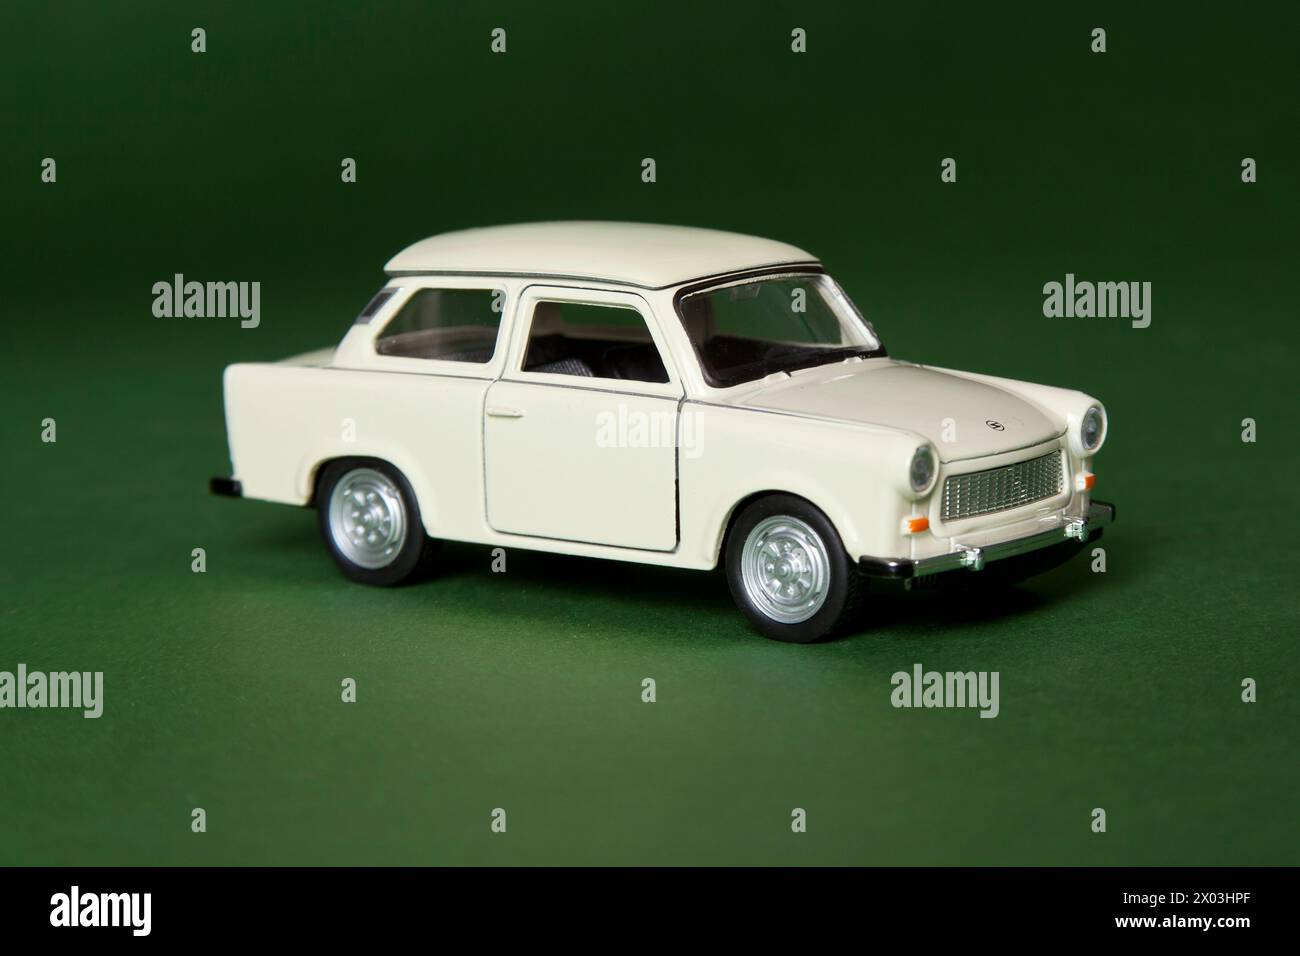 Model of a trabant car Stock Photo